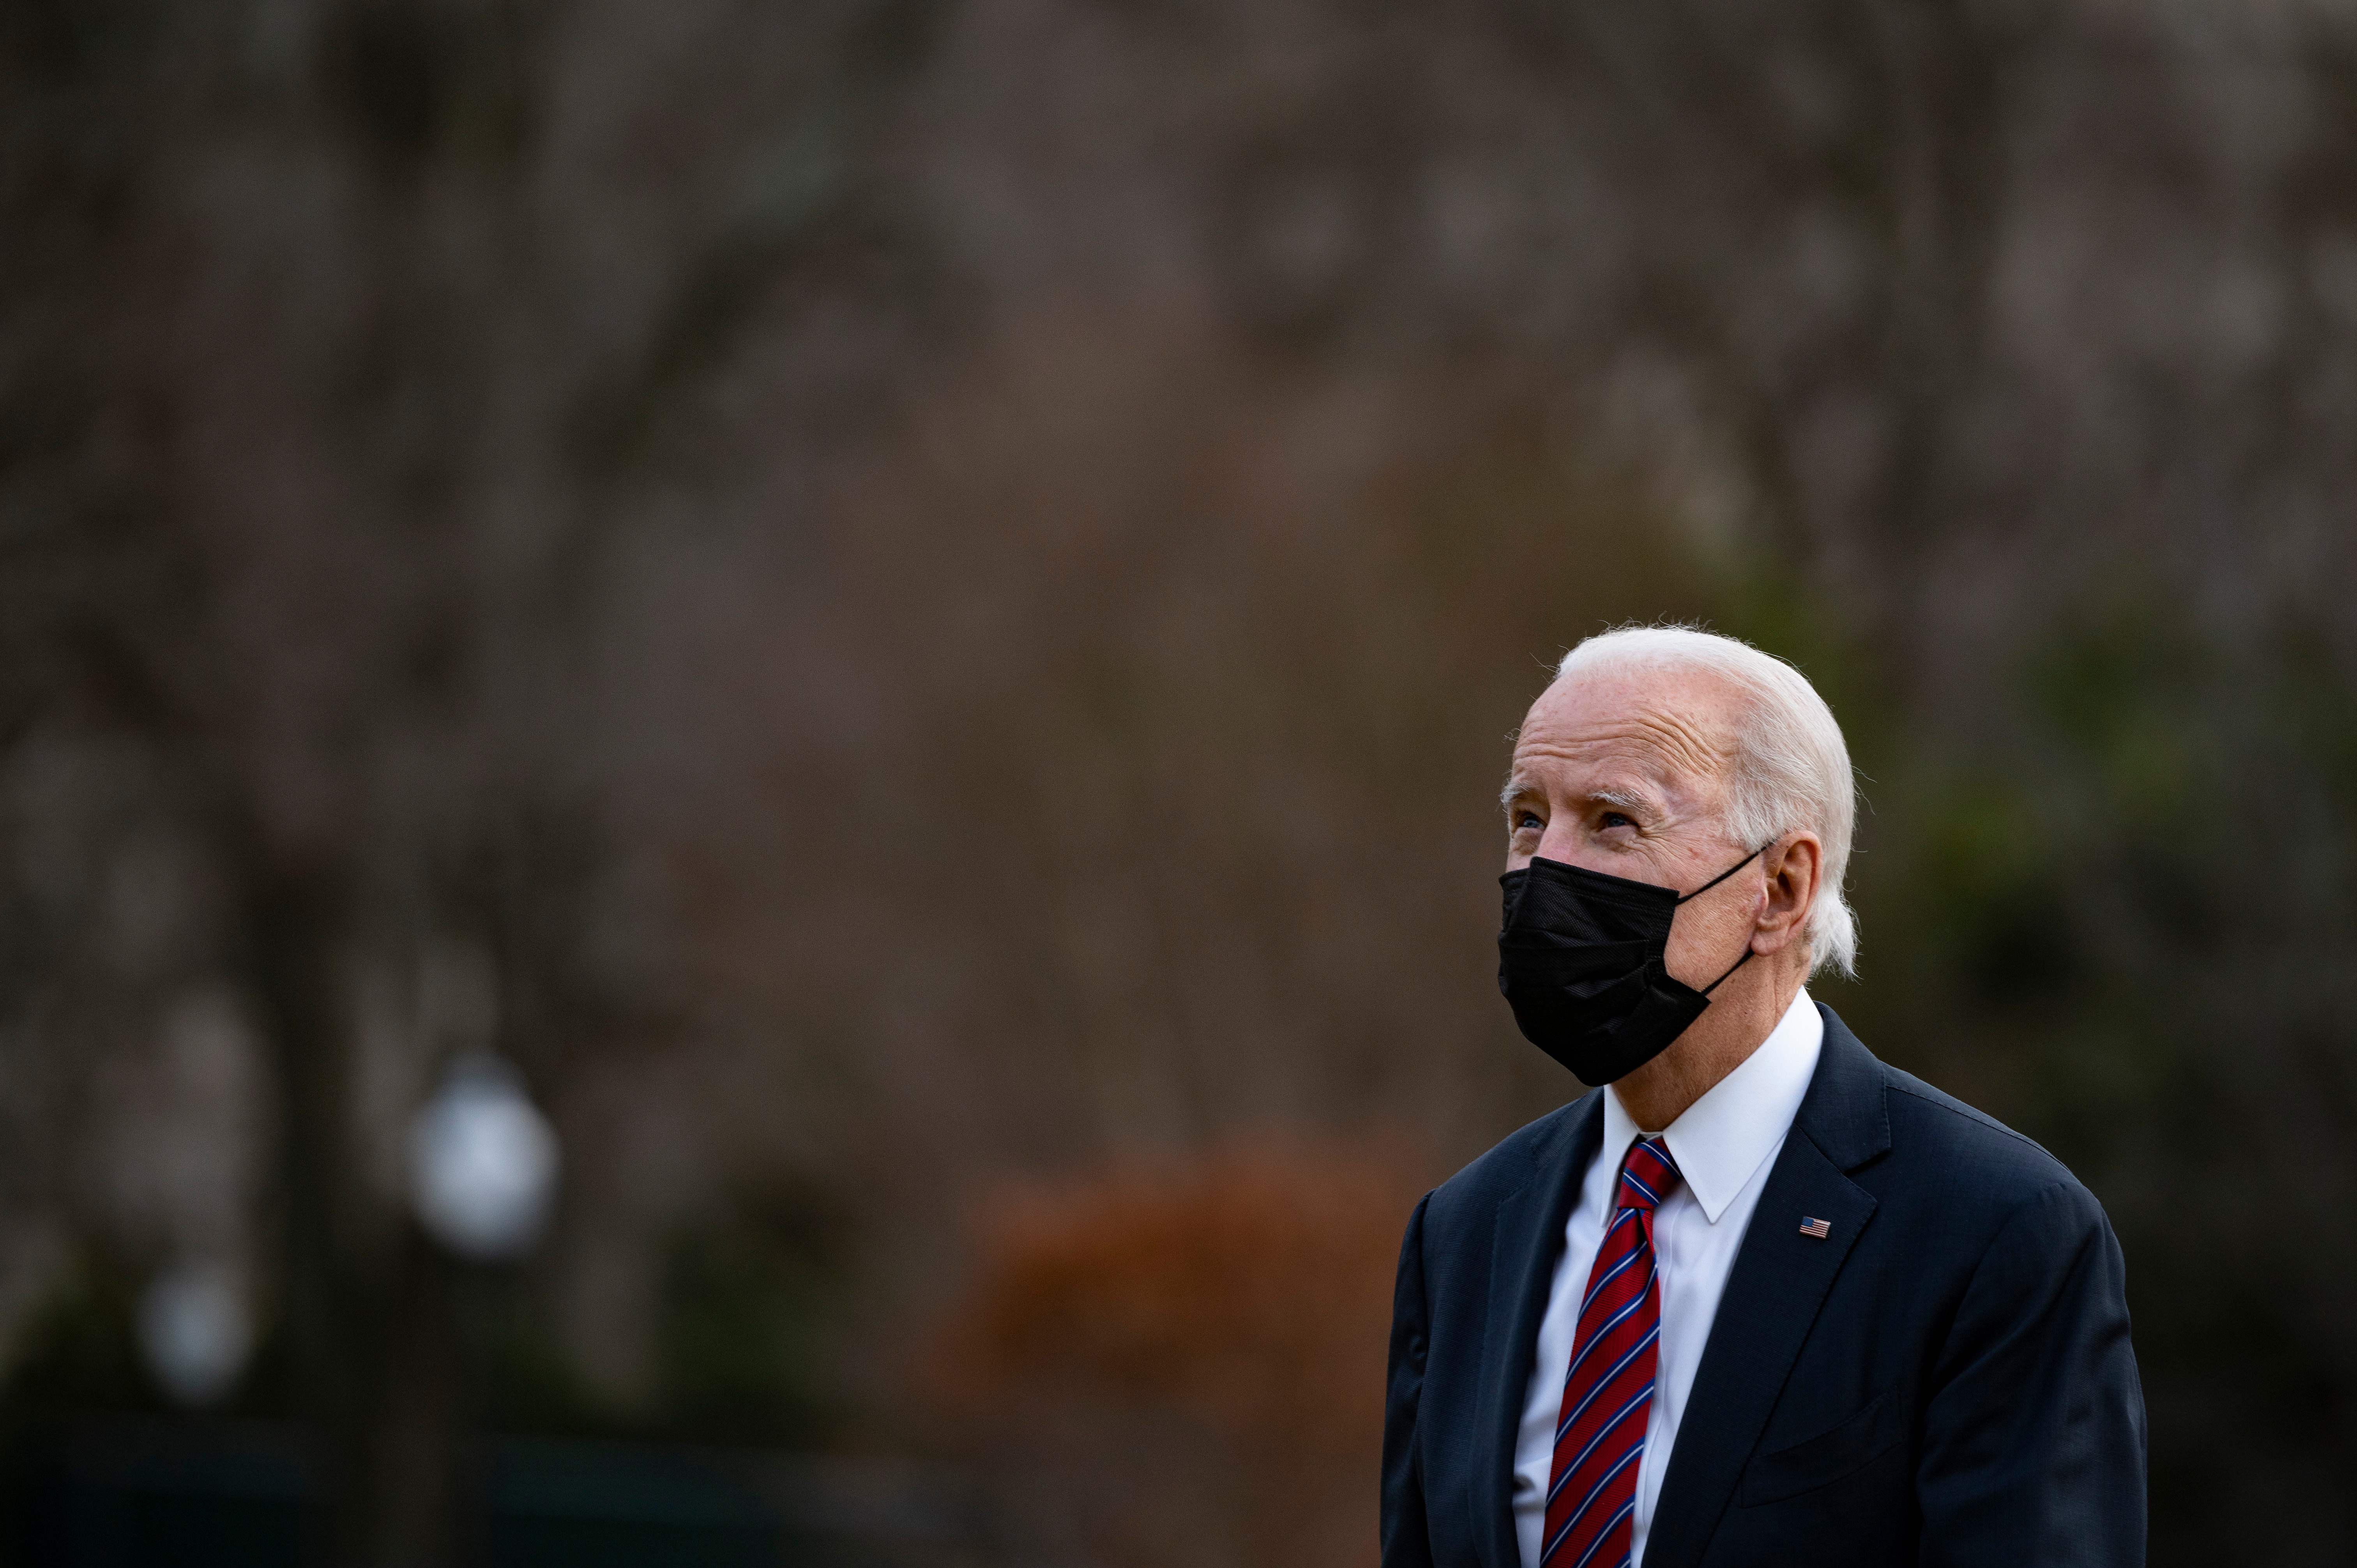 President Joe Biden arrives at the White House in Washington, DC, on January 29, 2021.